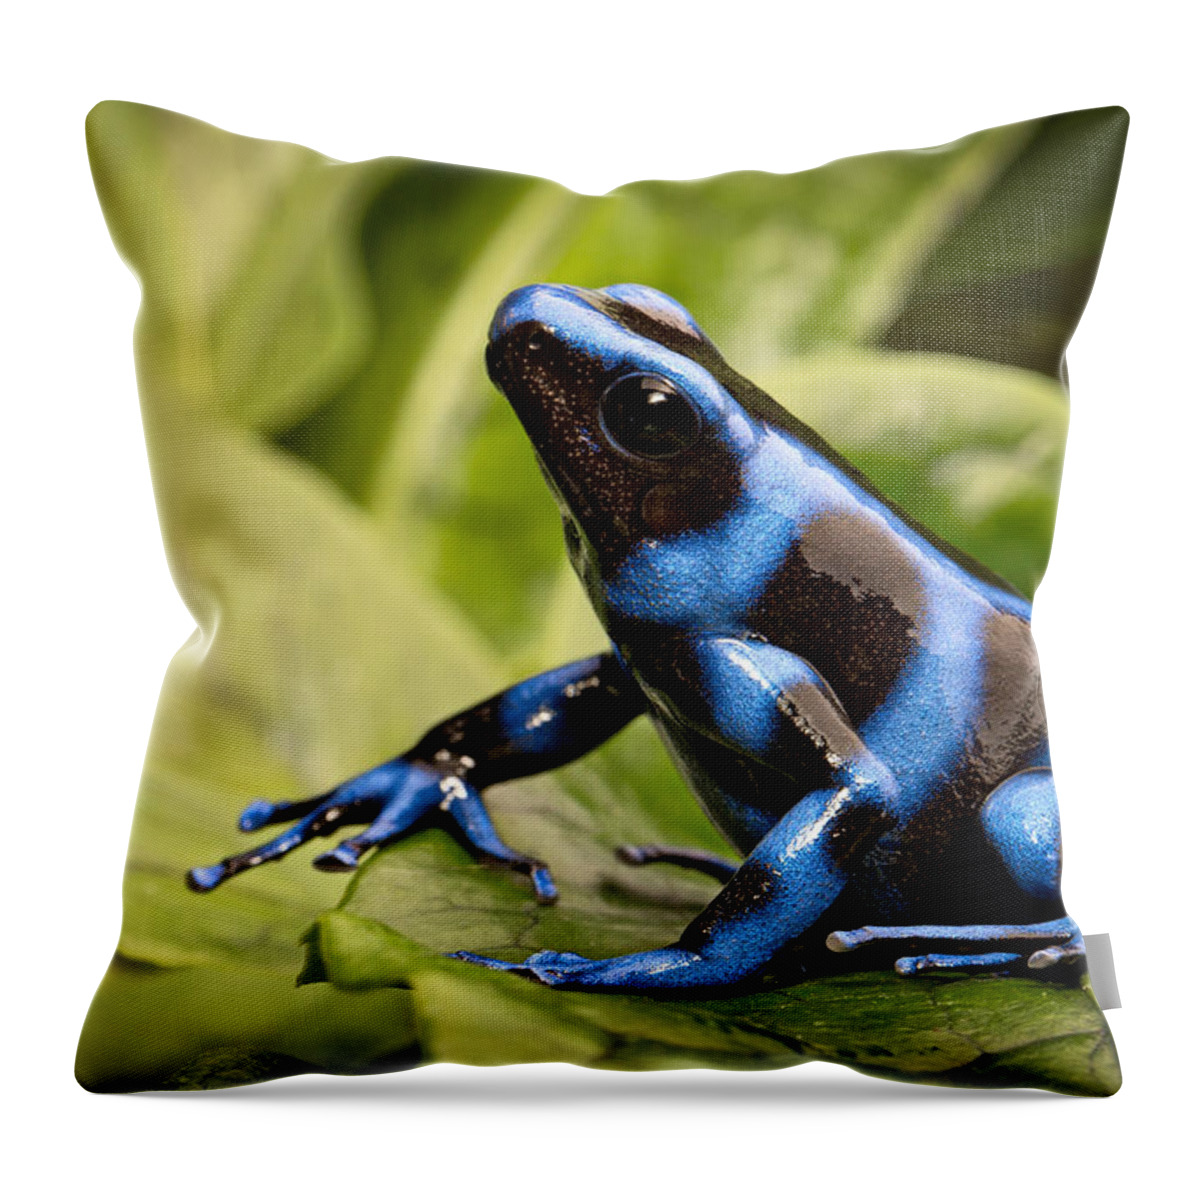 Blue Frog Throw Pillow featuring the photograph Blue Poison Dart Frog #4 by Dirk Ercken